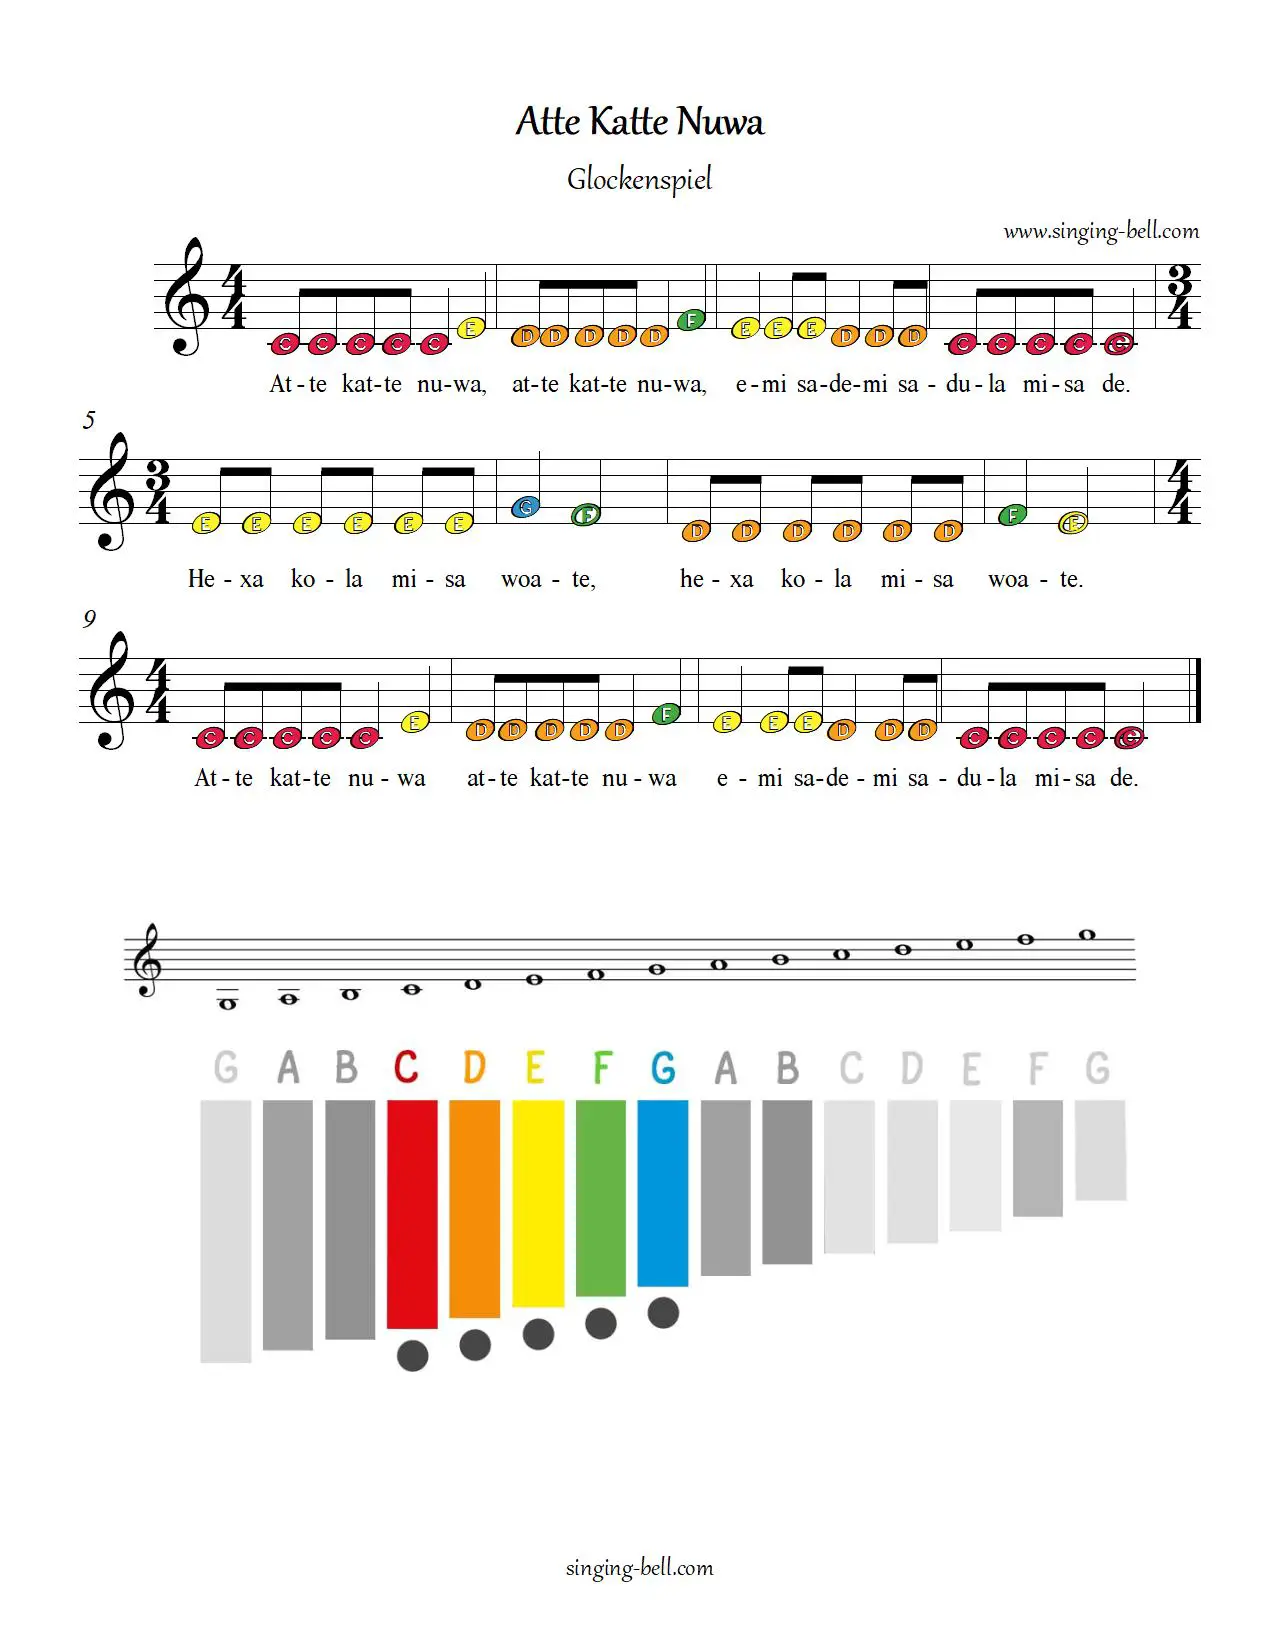 Atte Katte Nuwa free xylophone glockenspiel sheet music color notes chart pdf